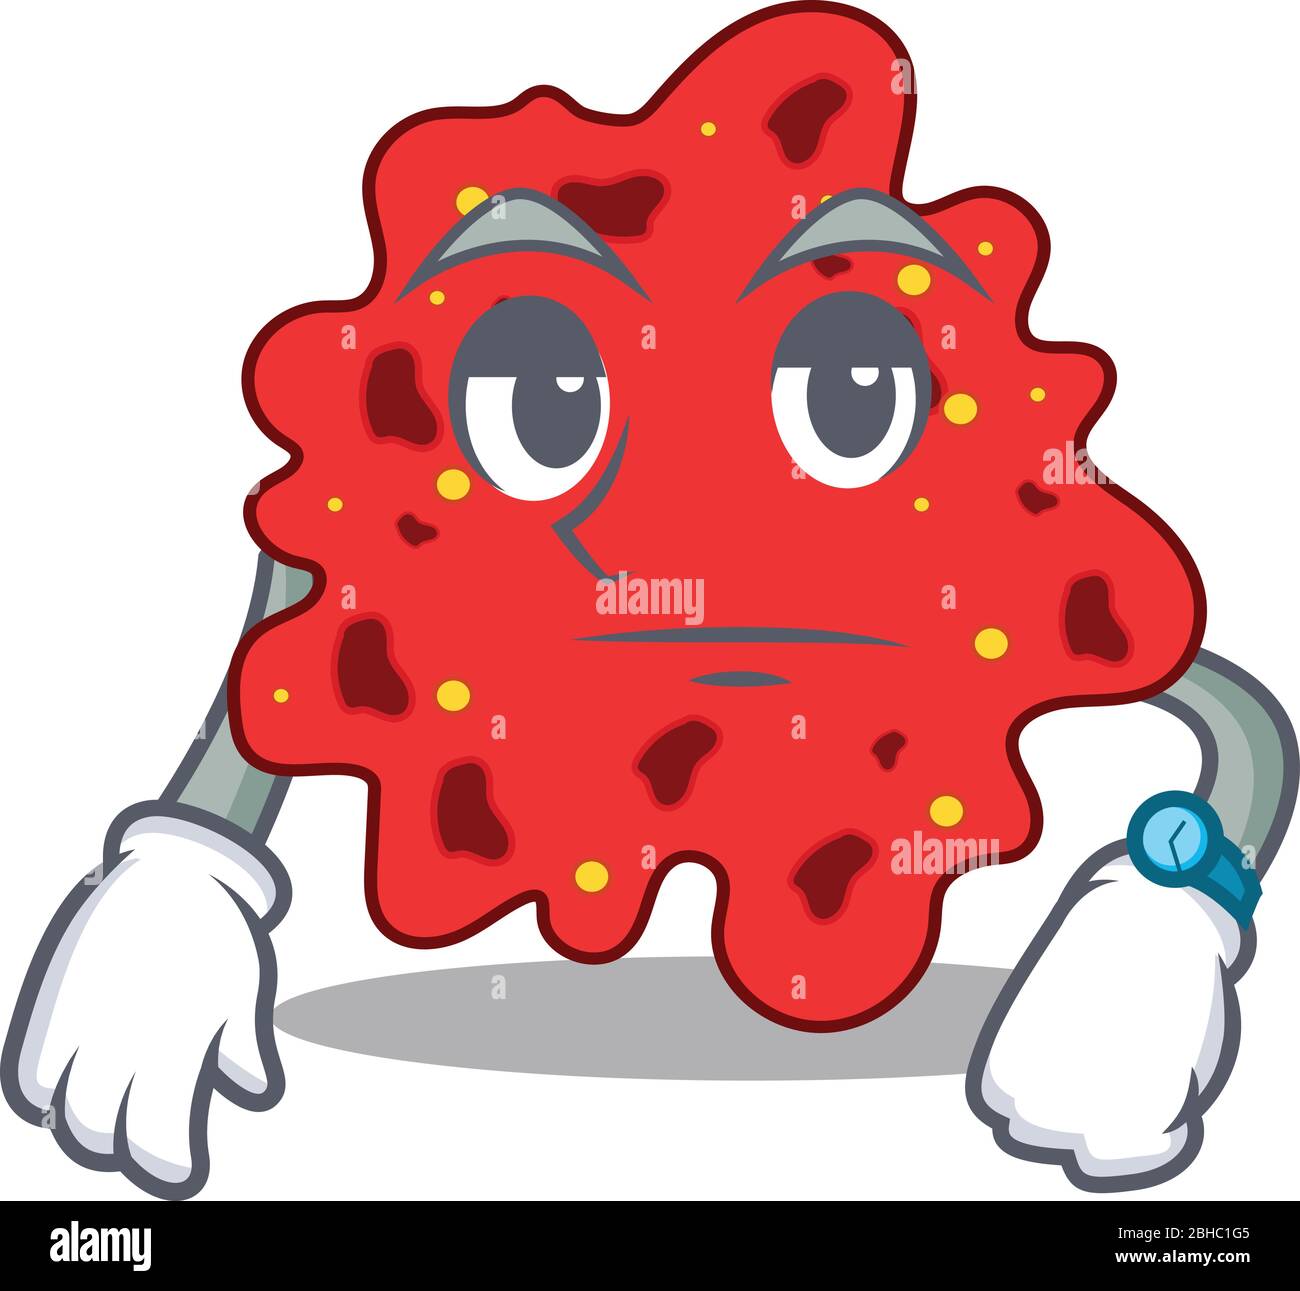 Mascot design of streptococcus pneumoniae showing waiting gesture Stock Vector